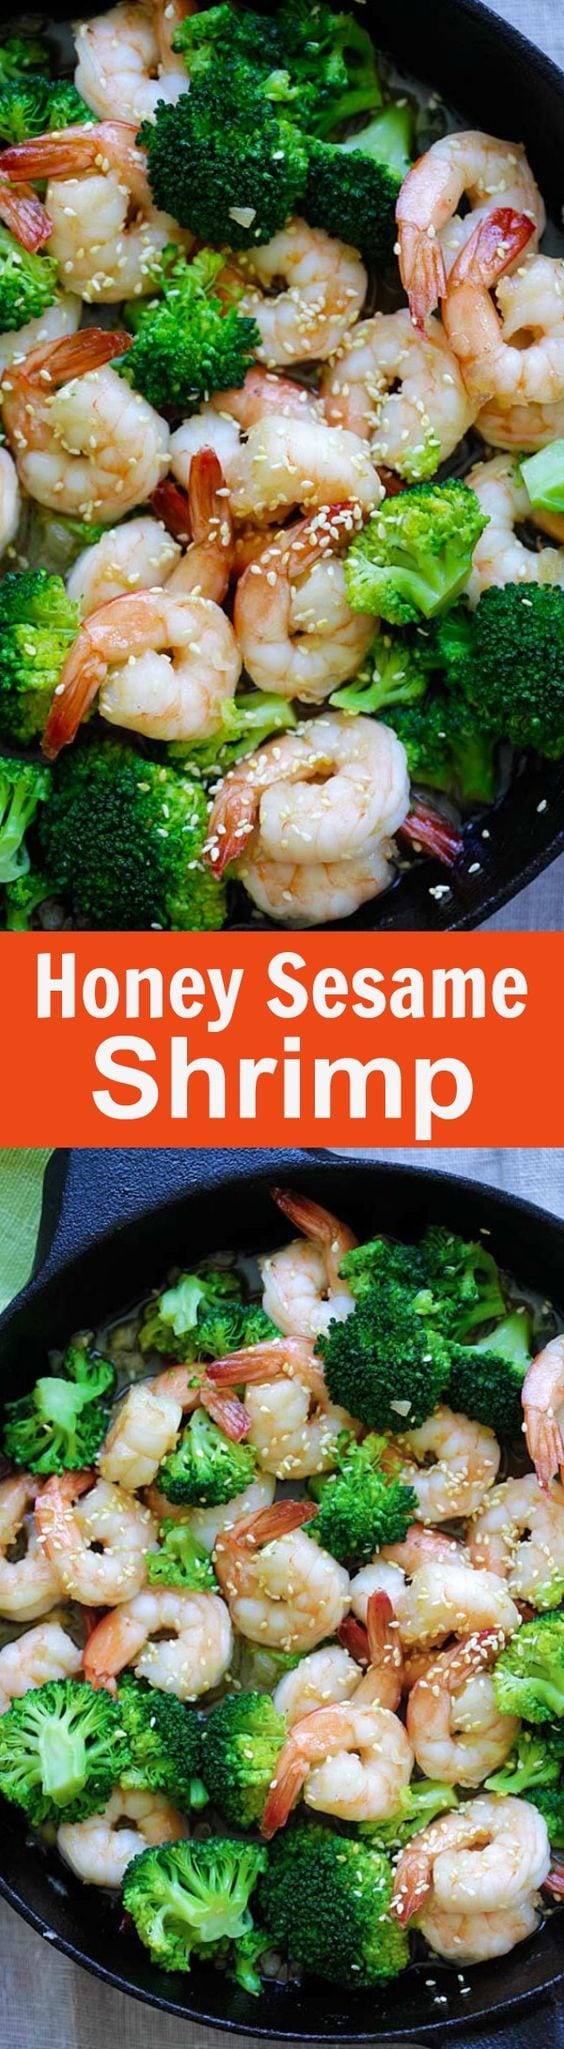 Honey Sesame Shrimp – easy and healthy shrimp stir-fry with broccoli in honey sesame sauce. Takes only 15 minutes to make | rasamalaysia.com